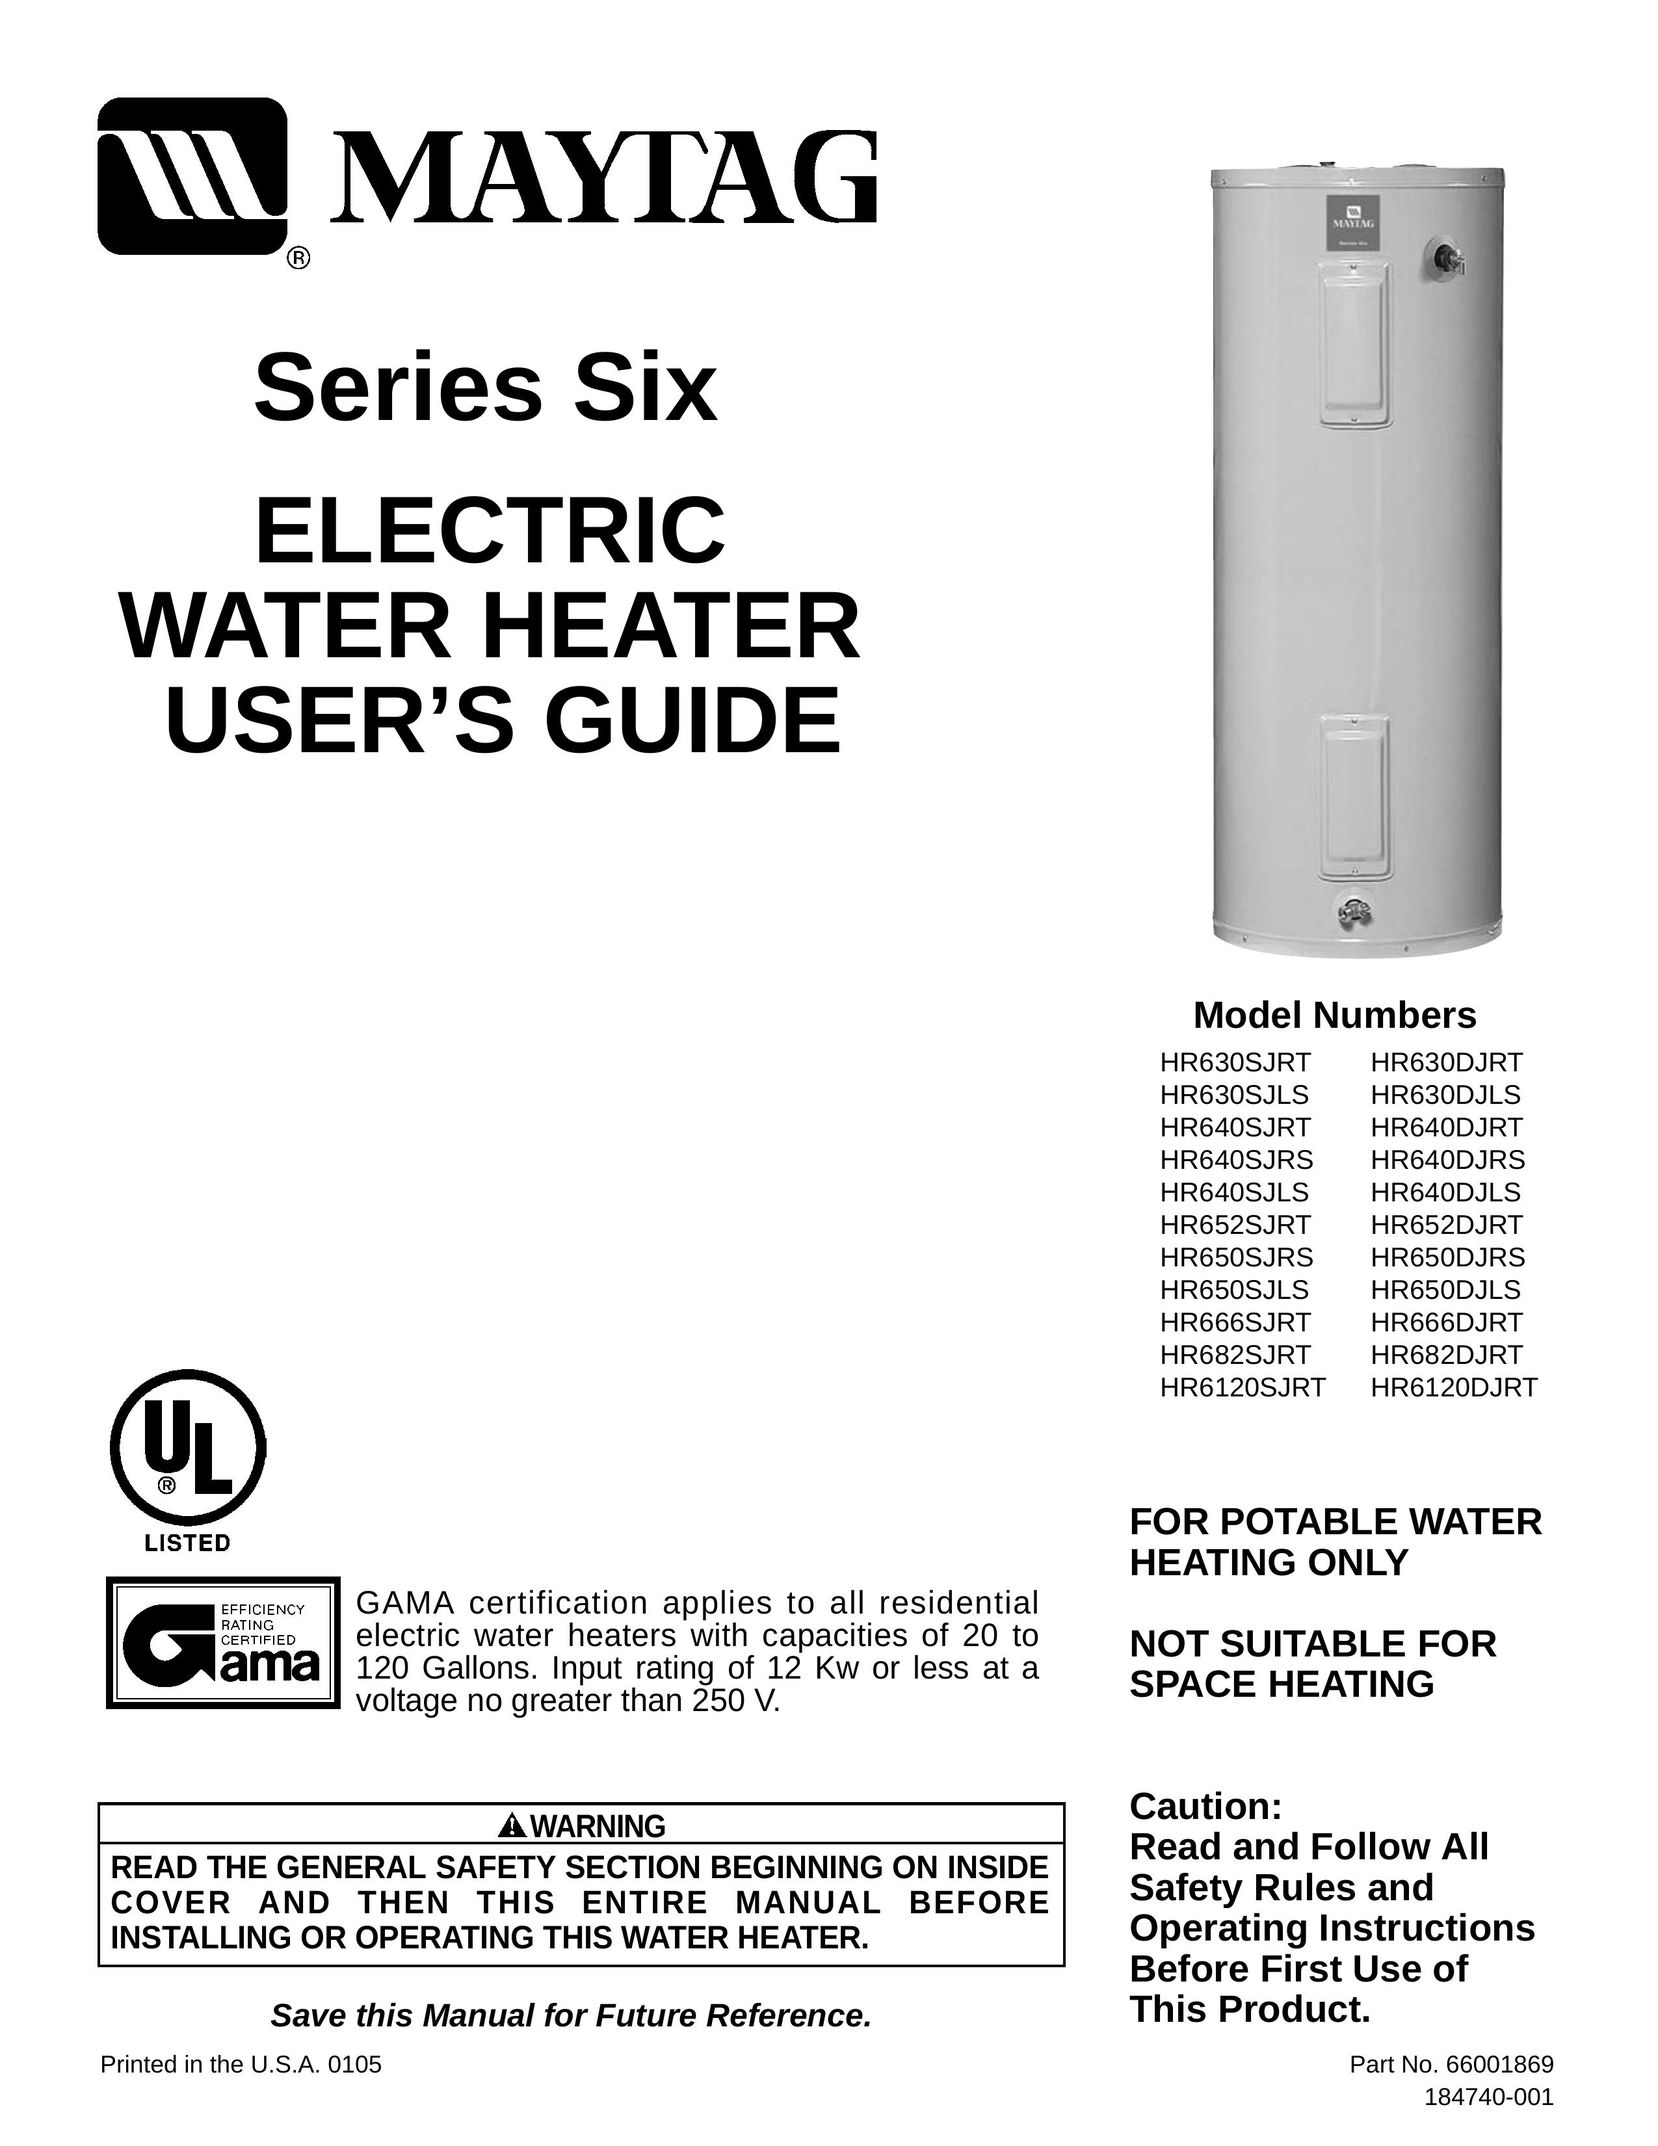 Maytag HR640DJRT Water Heater User Manual